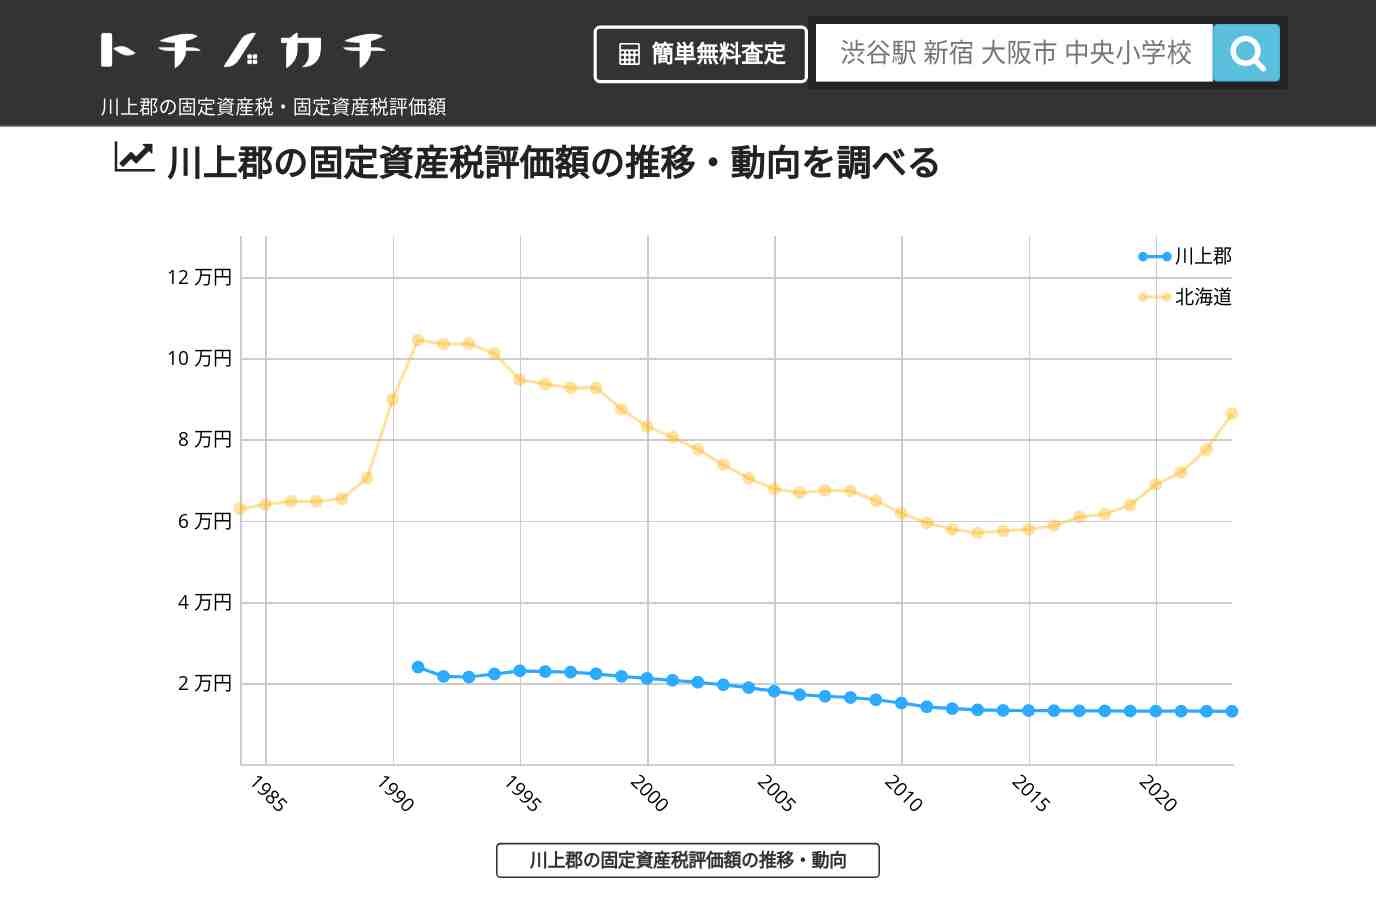 川上郡(北海道)の固定資産税・固定資産税評価額 | トチノカチ